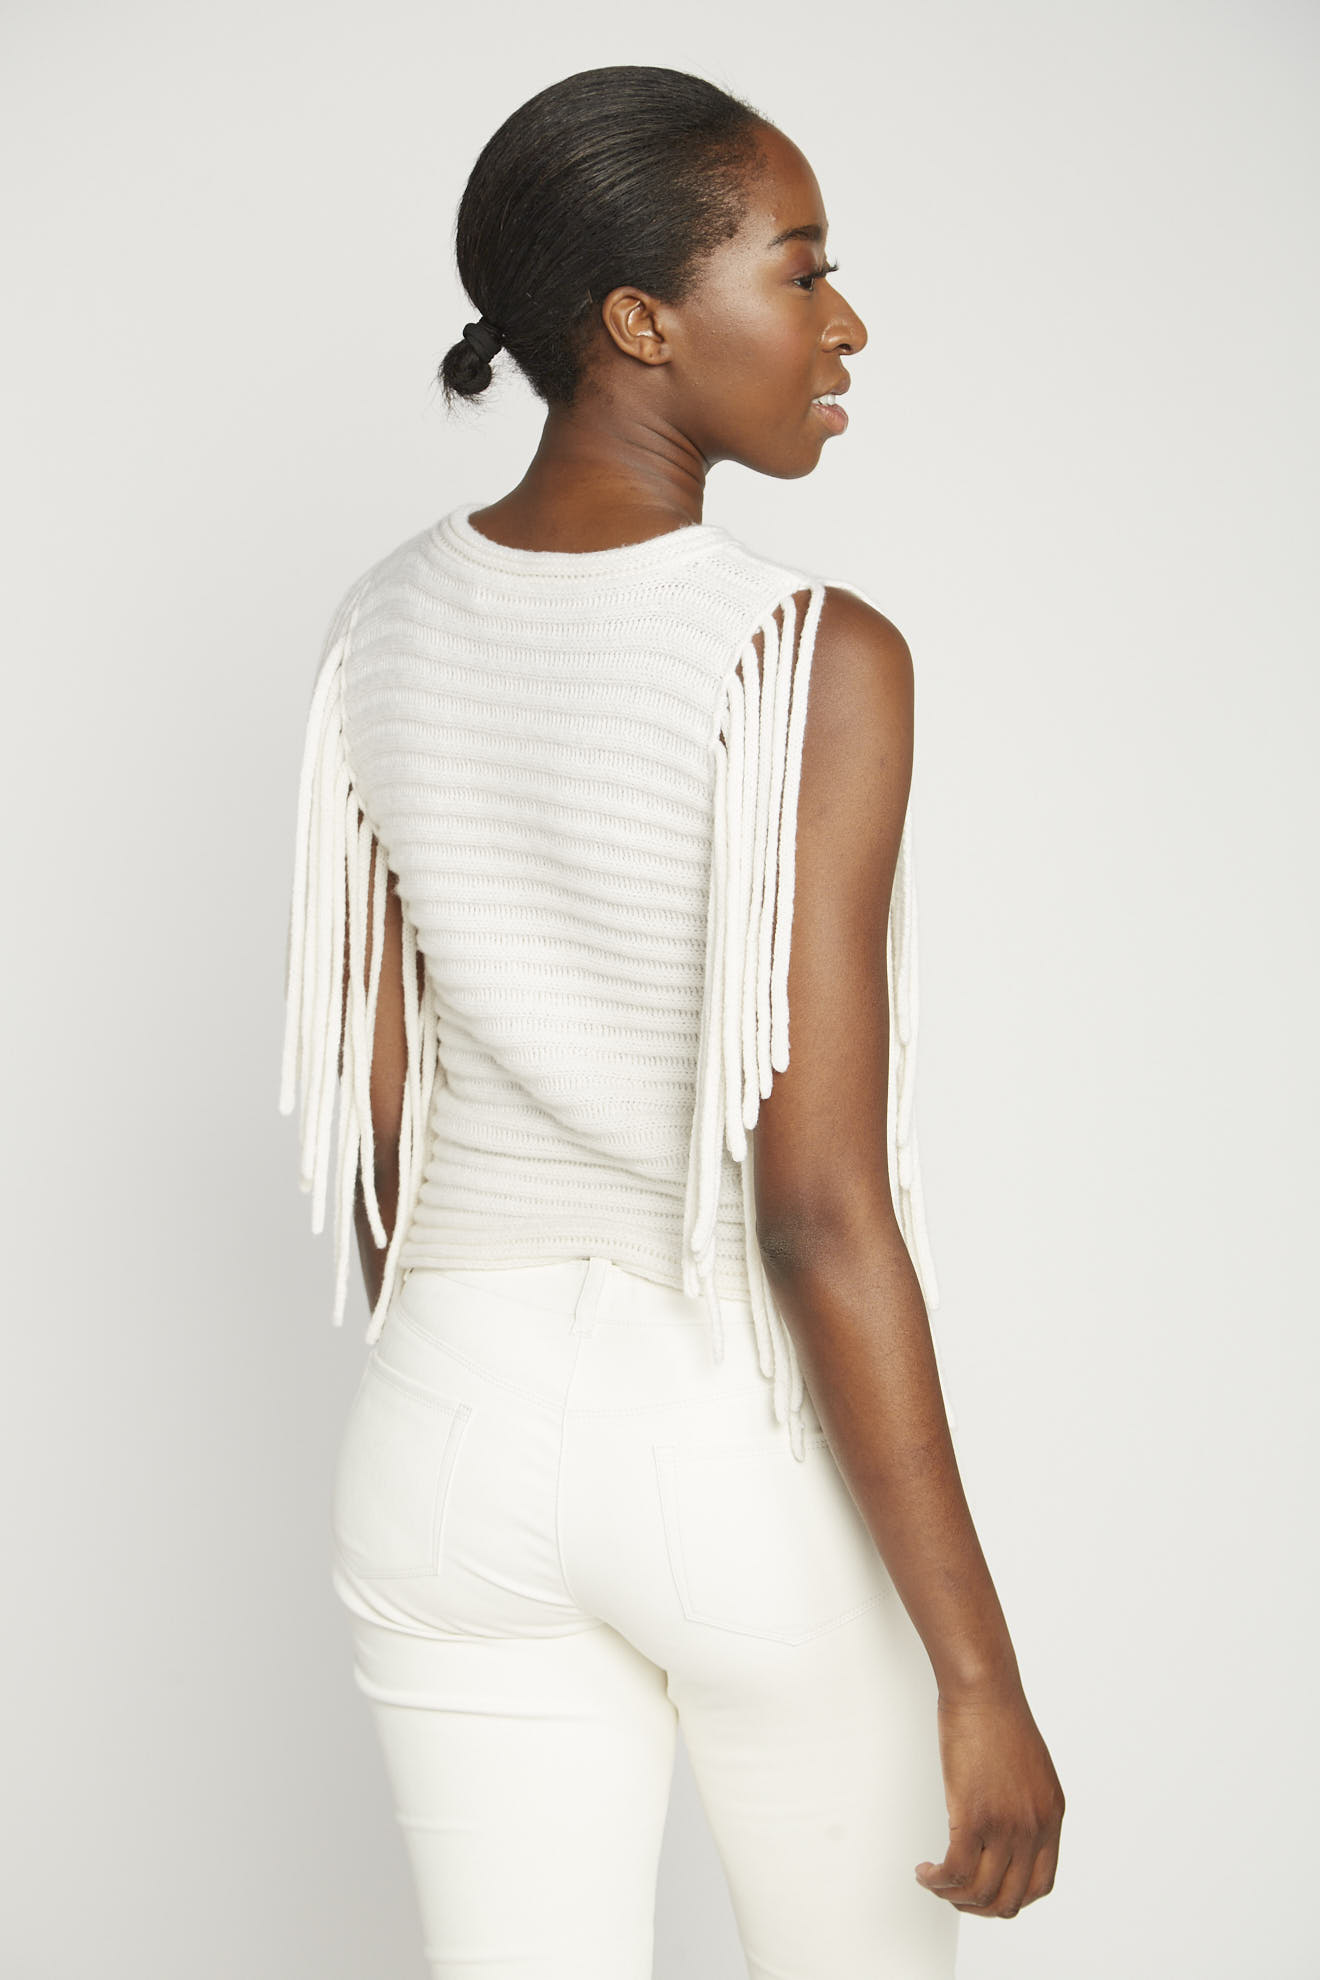 iris von Arnim top white plain cotton model back